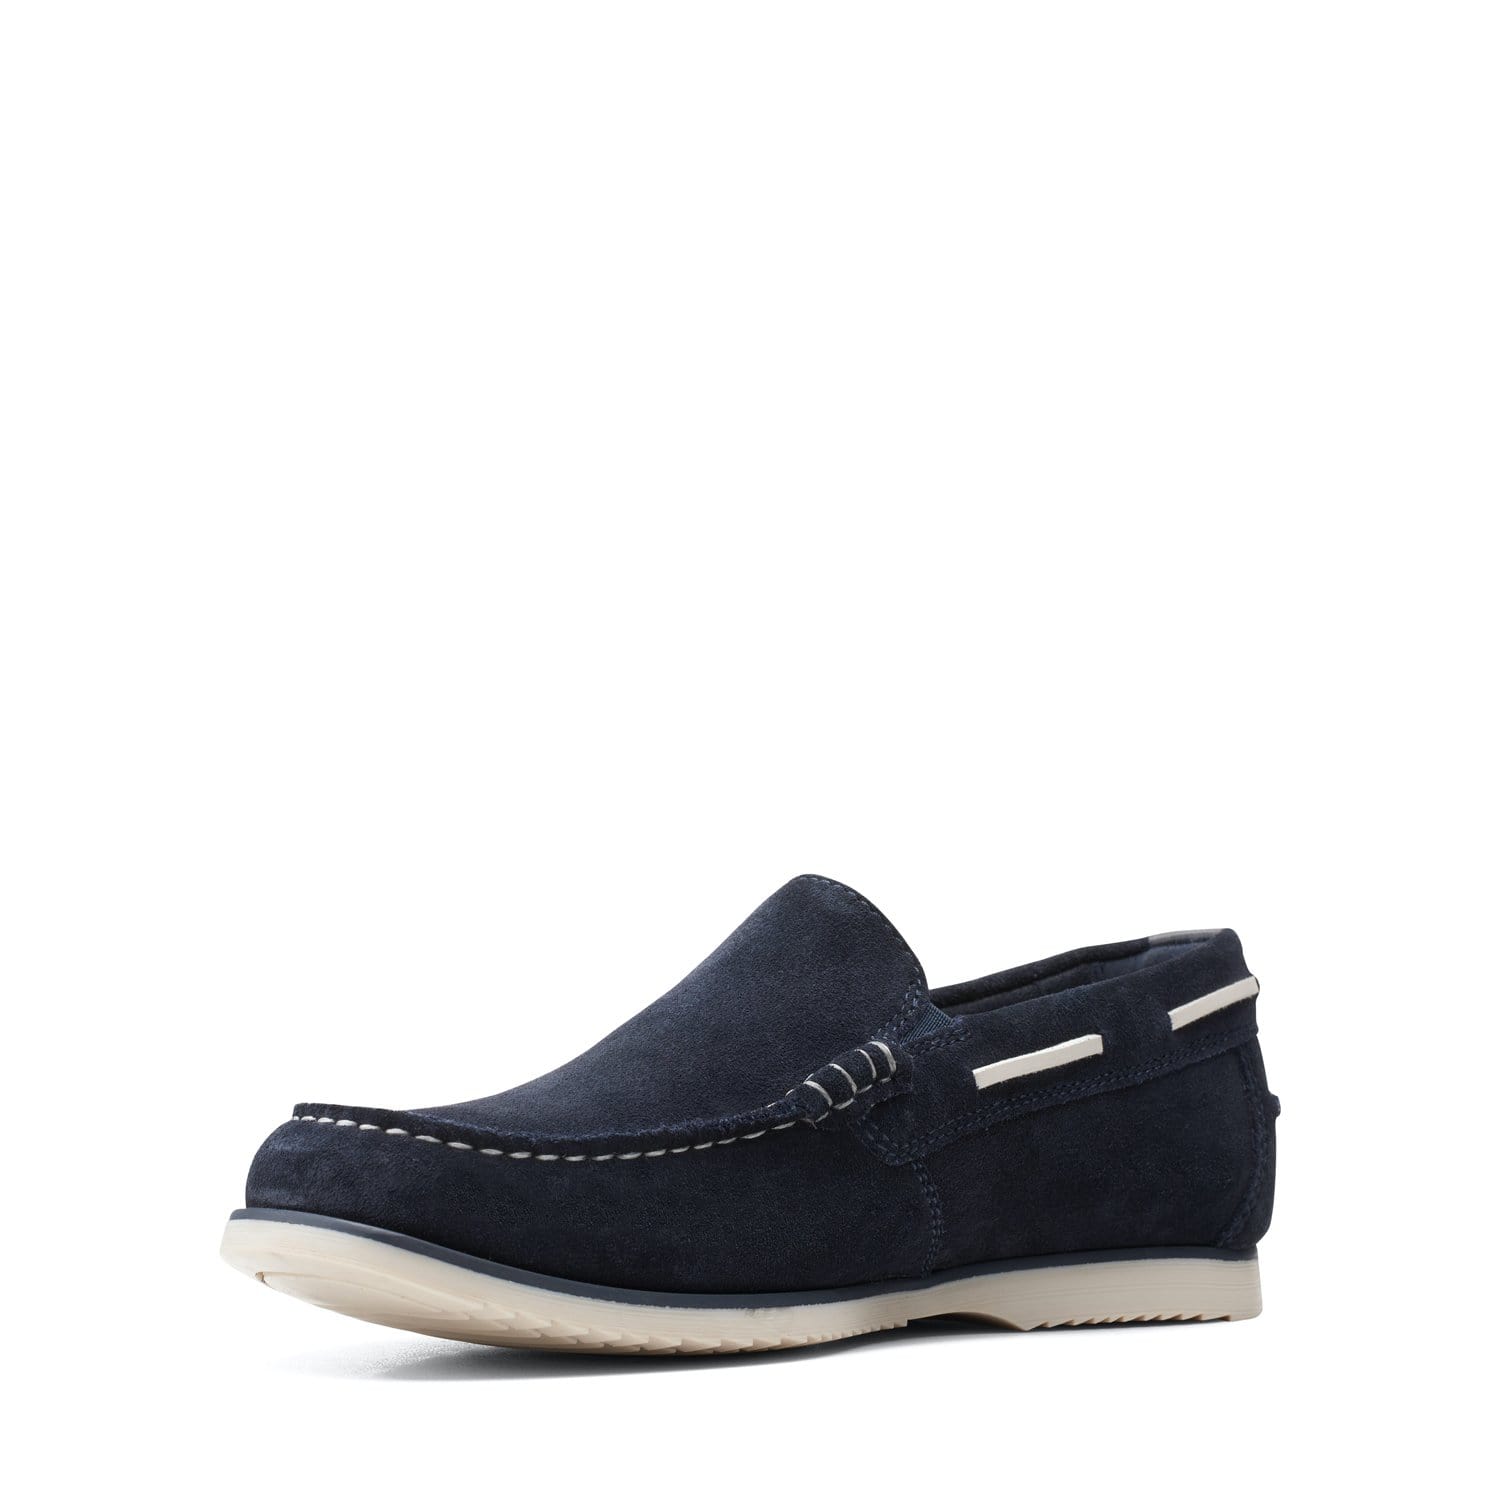 Clarks Noonan Step - Shoes - Navy Suede - 261594737 - G Width (Standard Fit)